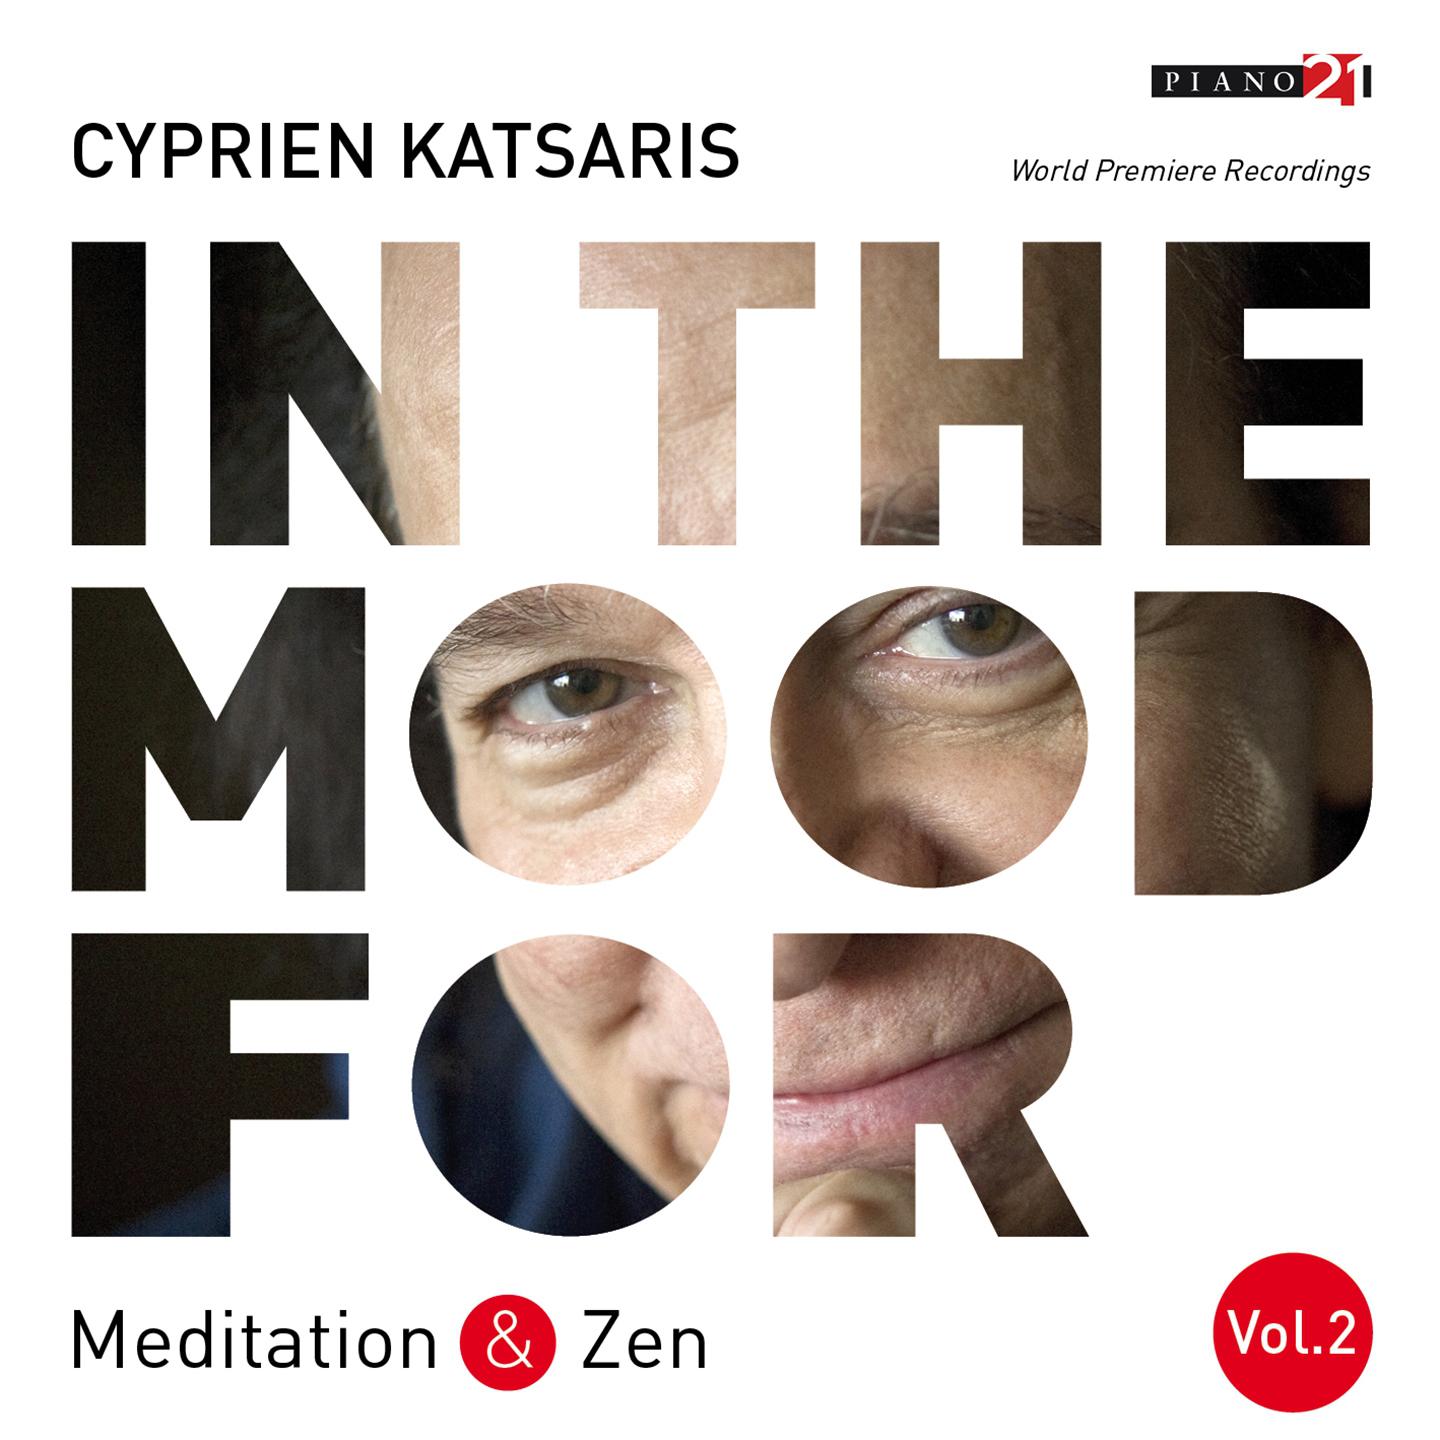 In the Mood for Meditation  Zen, Vol. 2: Chopin, Schumann, Wagner, SaintSa ns, Tchaikovsky, Mahler...